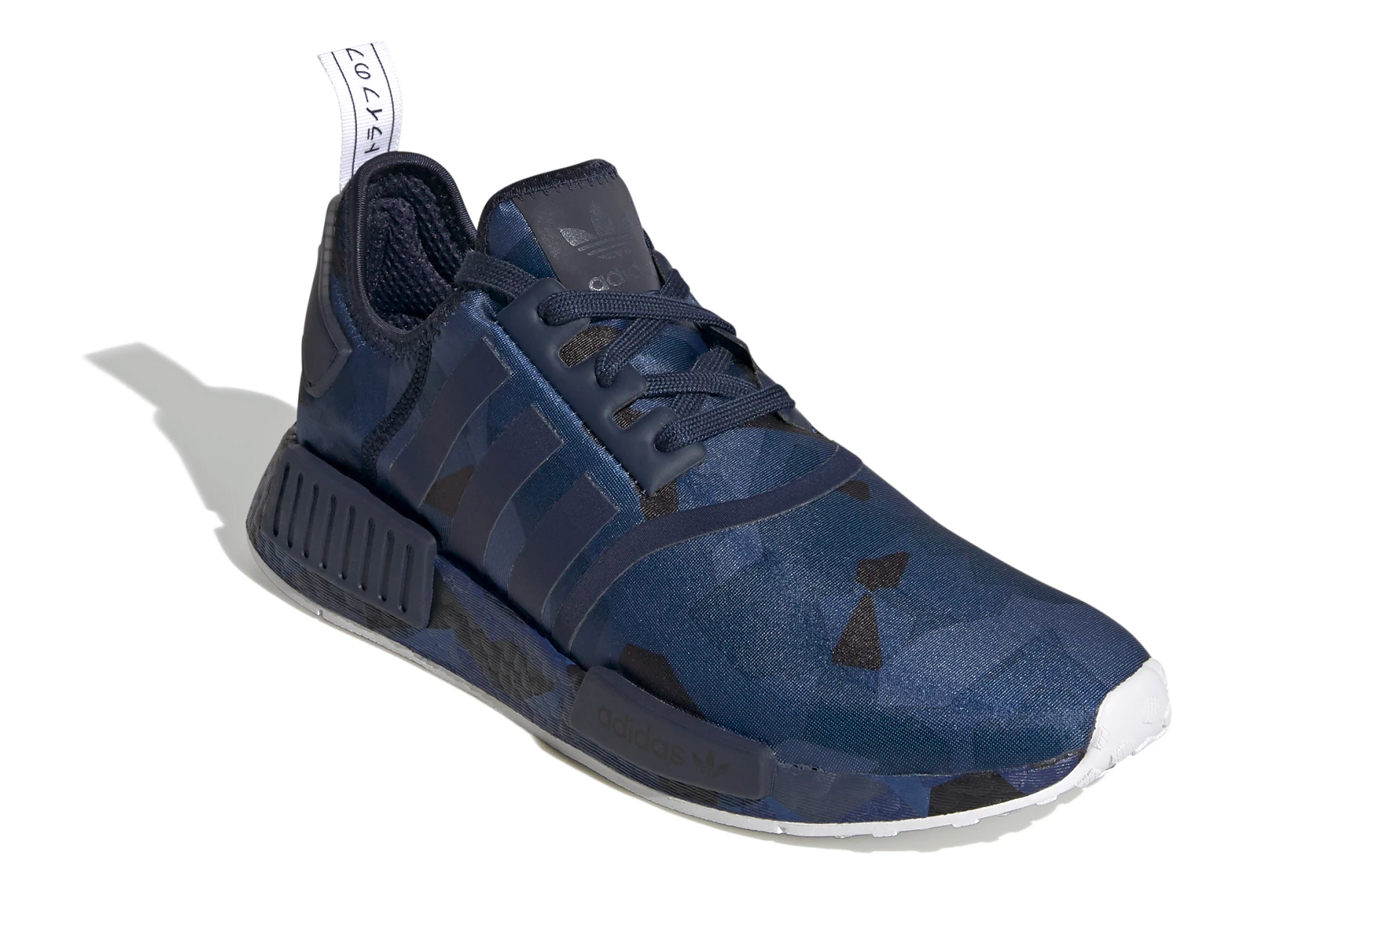 adidas R1 "Sand/Core Black" Sneaker Release | Drops | Hypebeast